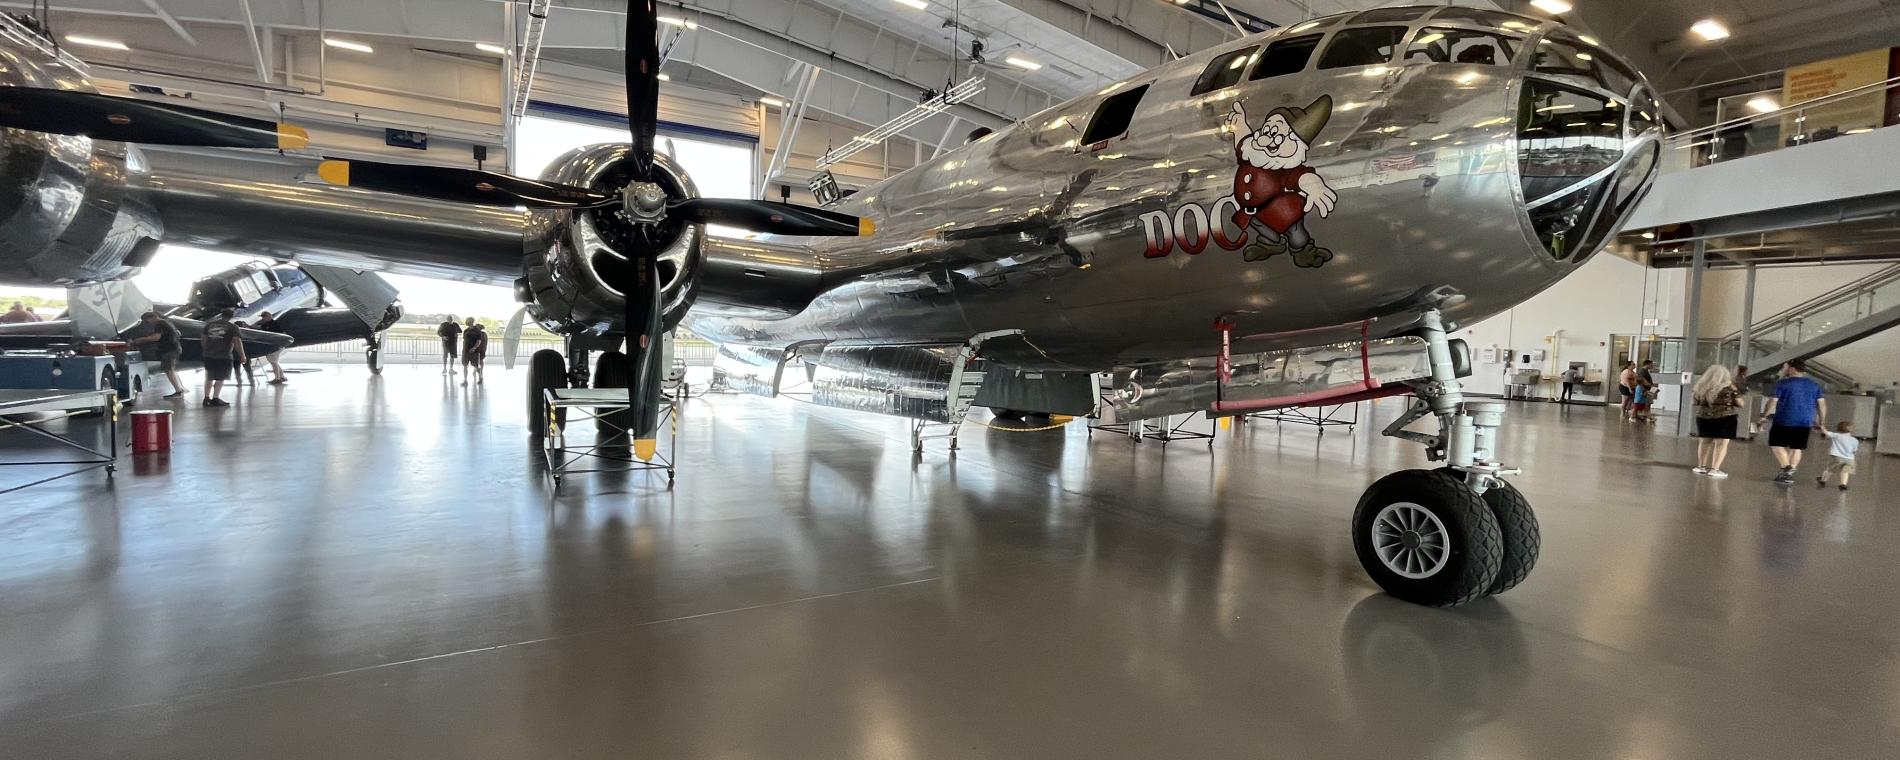 B-29 Doc Hangar, Education and Visitors Center